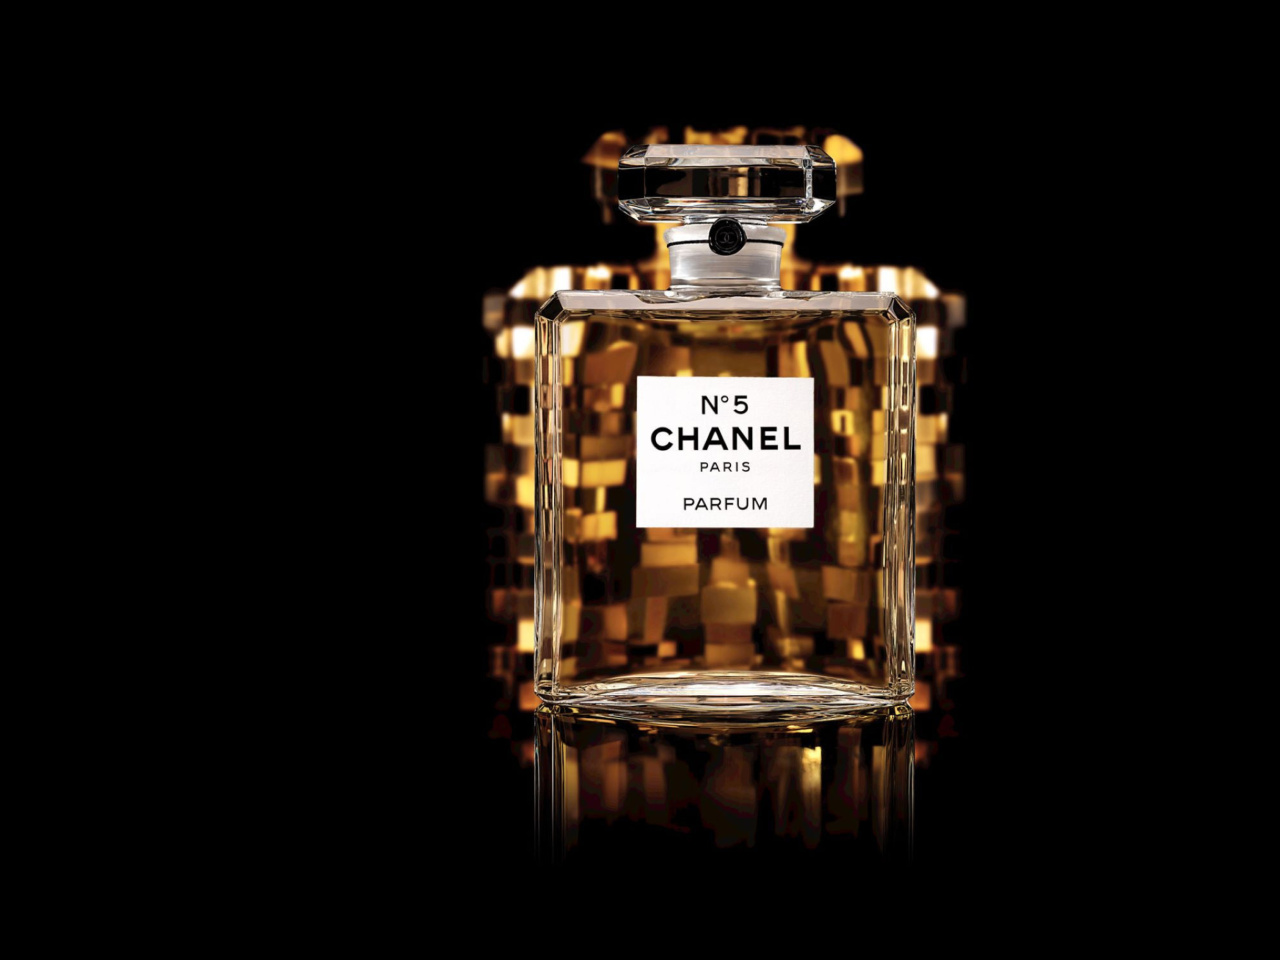 Das Chanel 5 Fragrance Perfume Wallpaper 1280x960